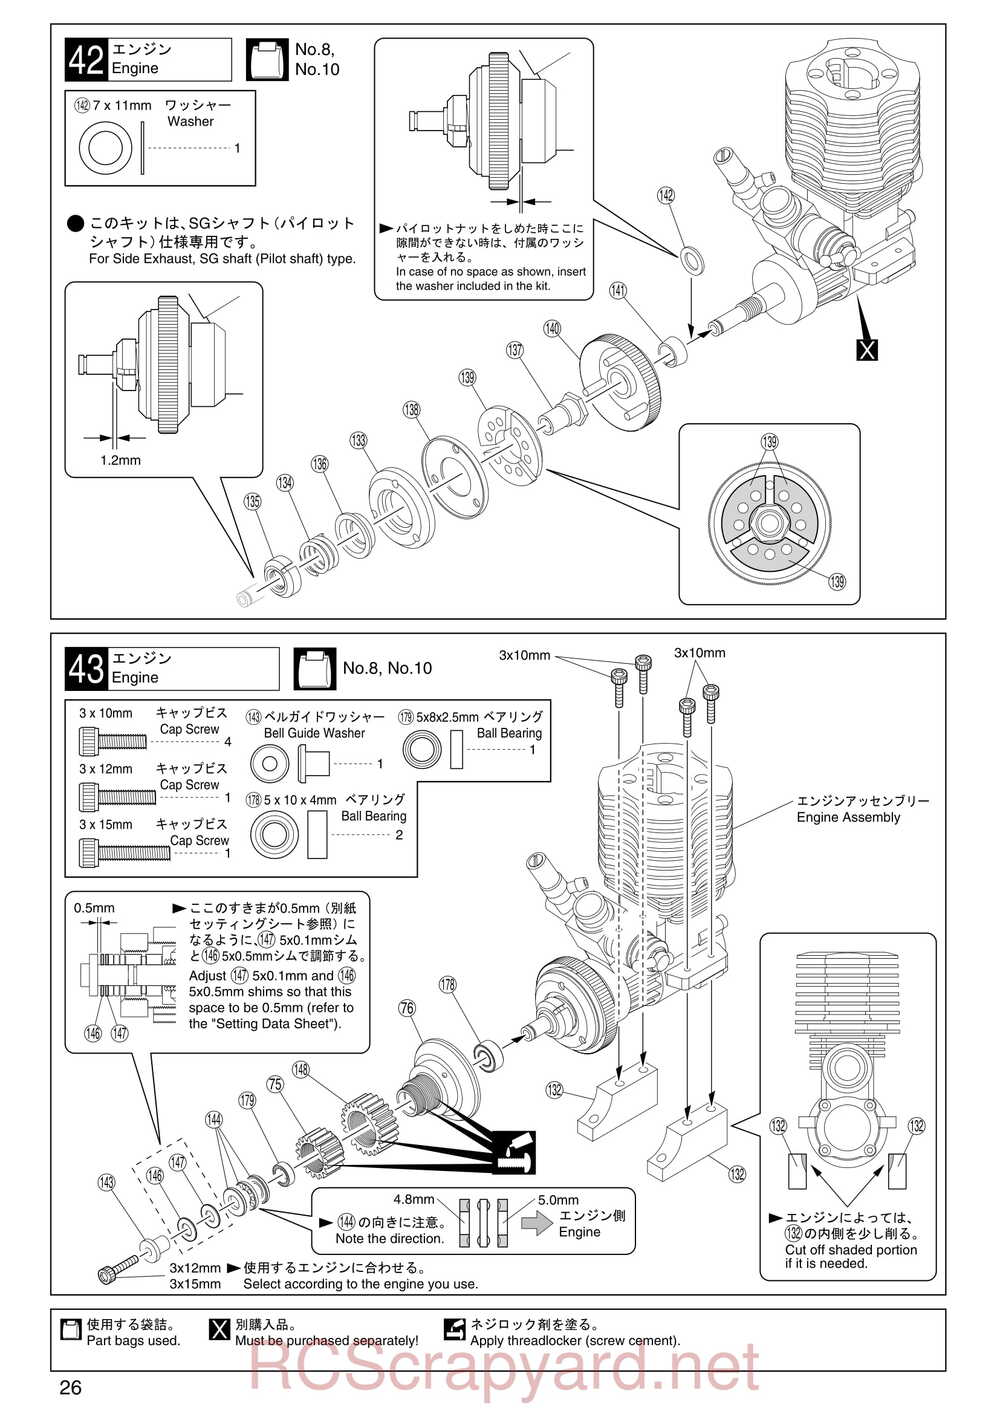 Kyosho - 31256 - V-One RRR - Manual - Page 26